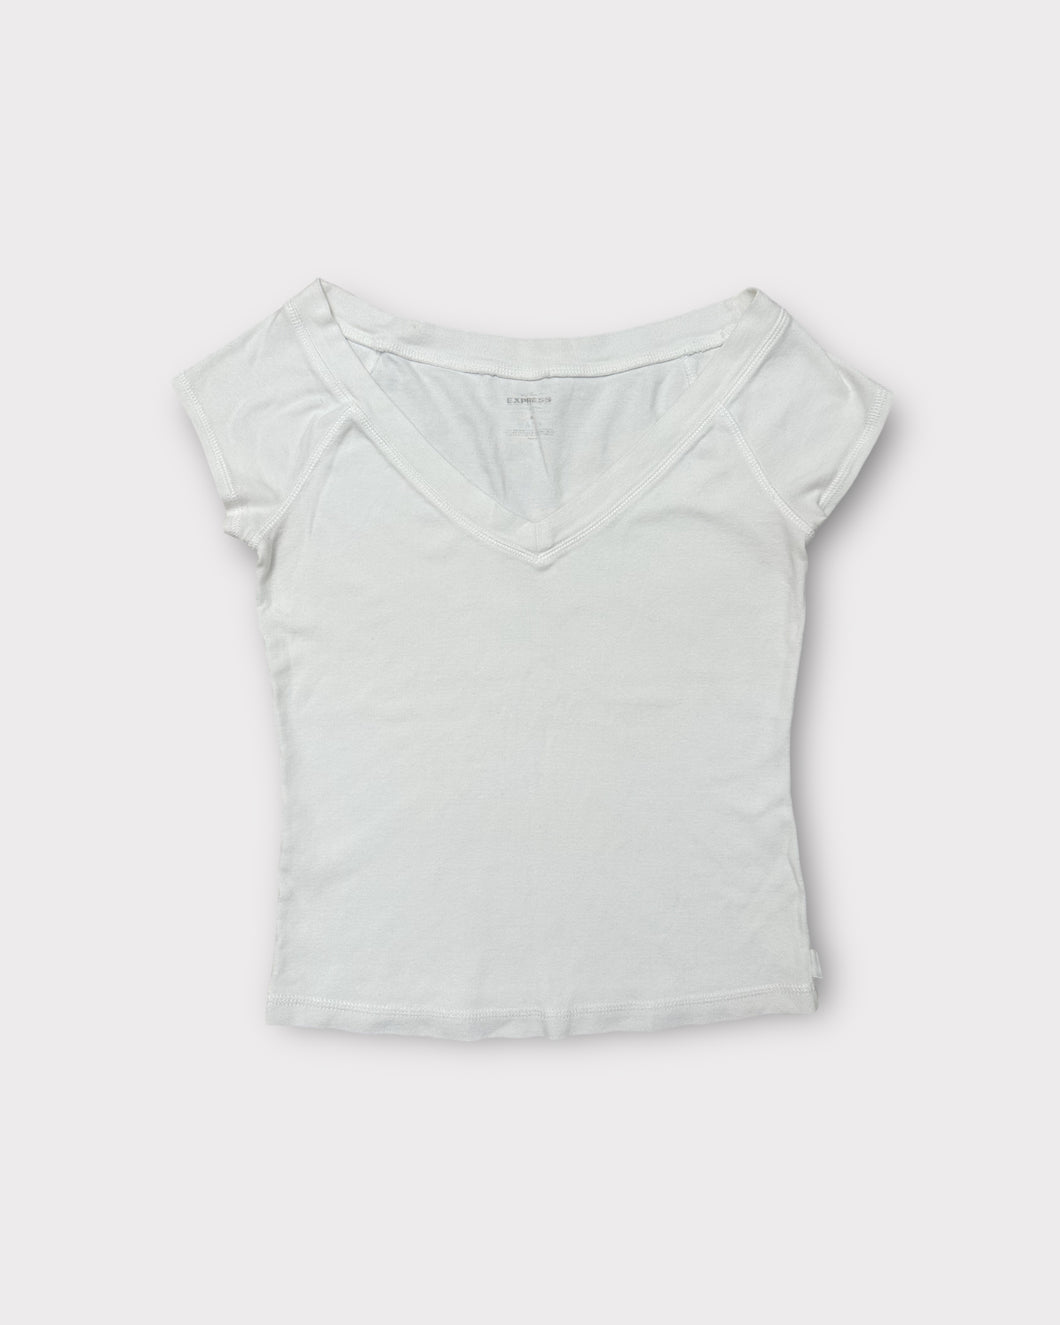 Express White V-Neck T-Shirt (M)